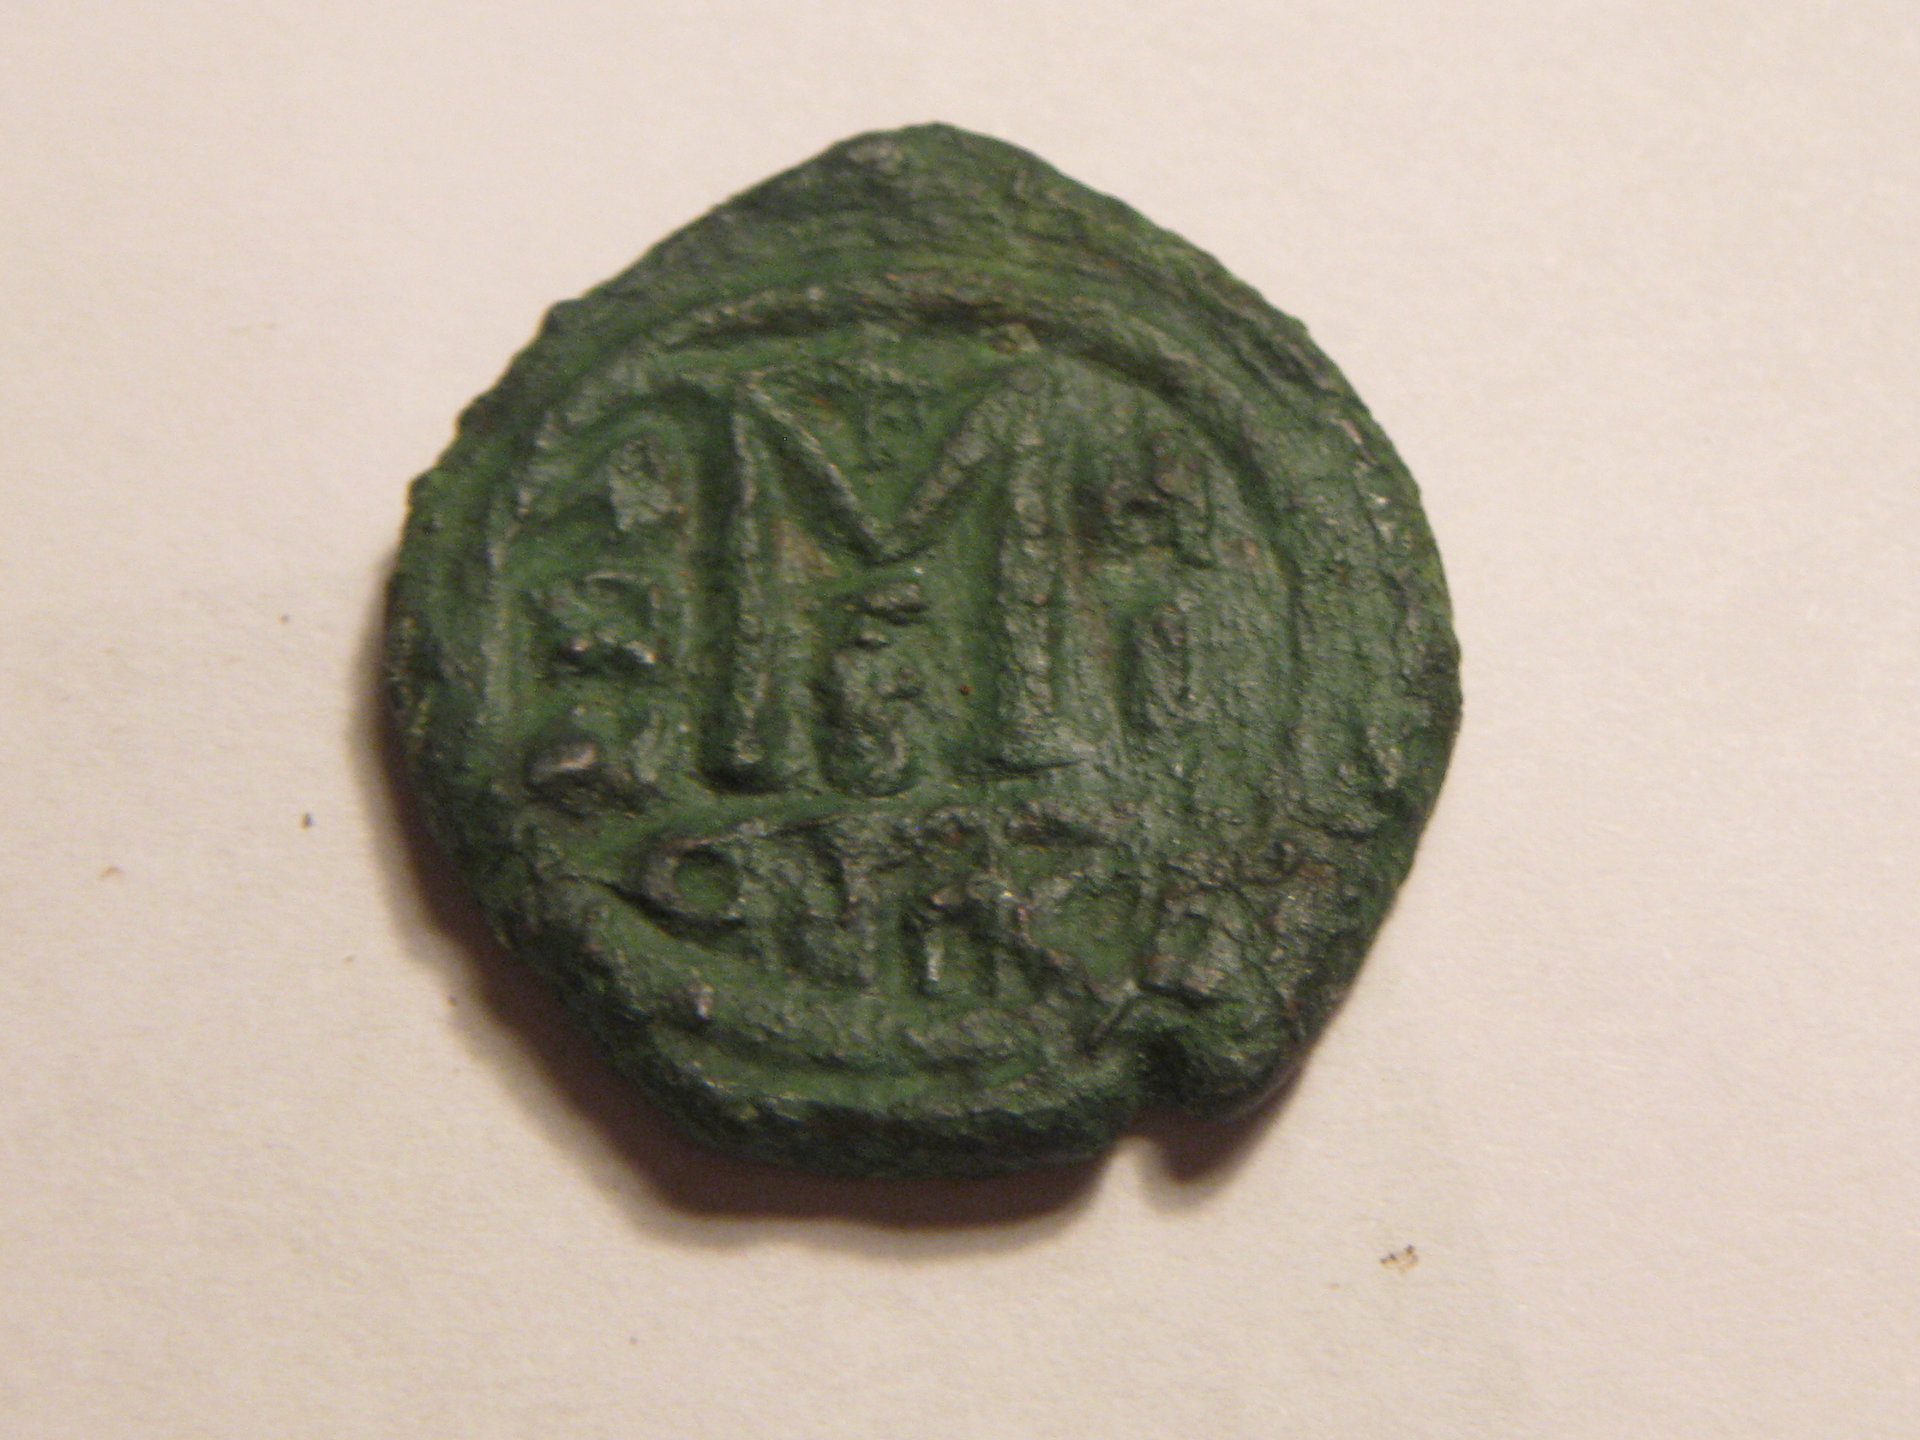 Justinian l leopold 6 kreuzter punic tainit 002.JPG